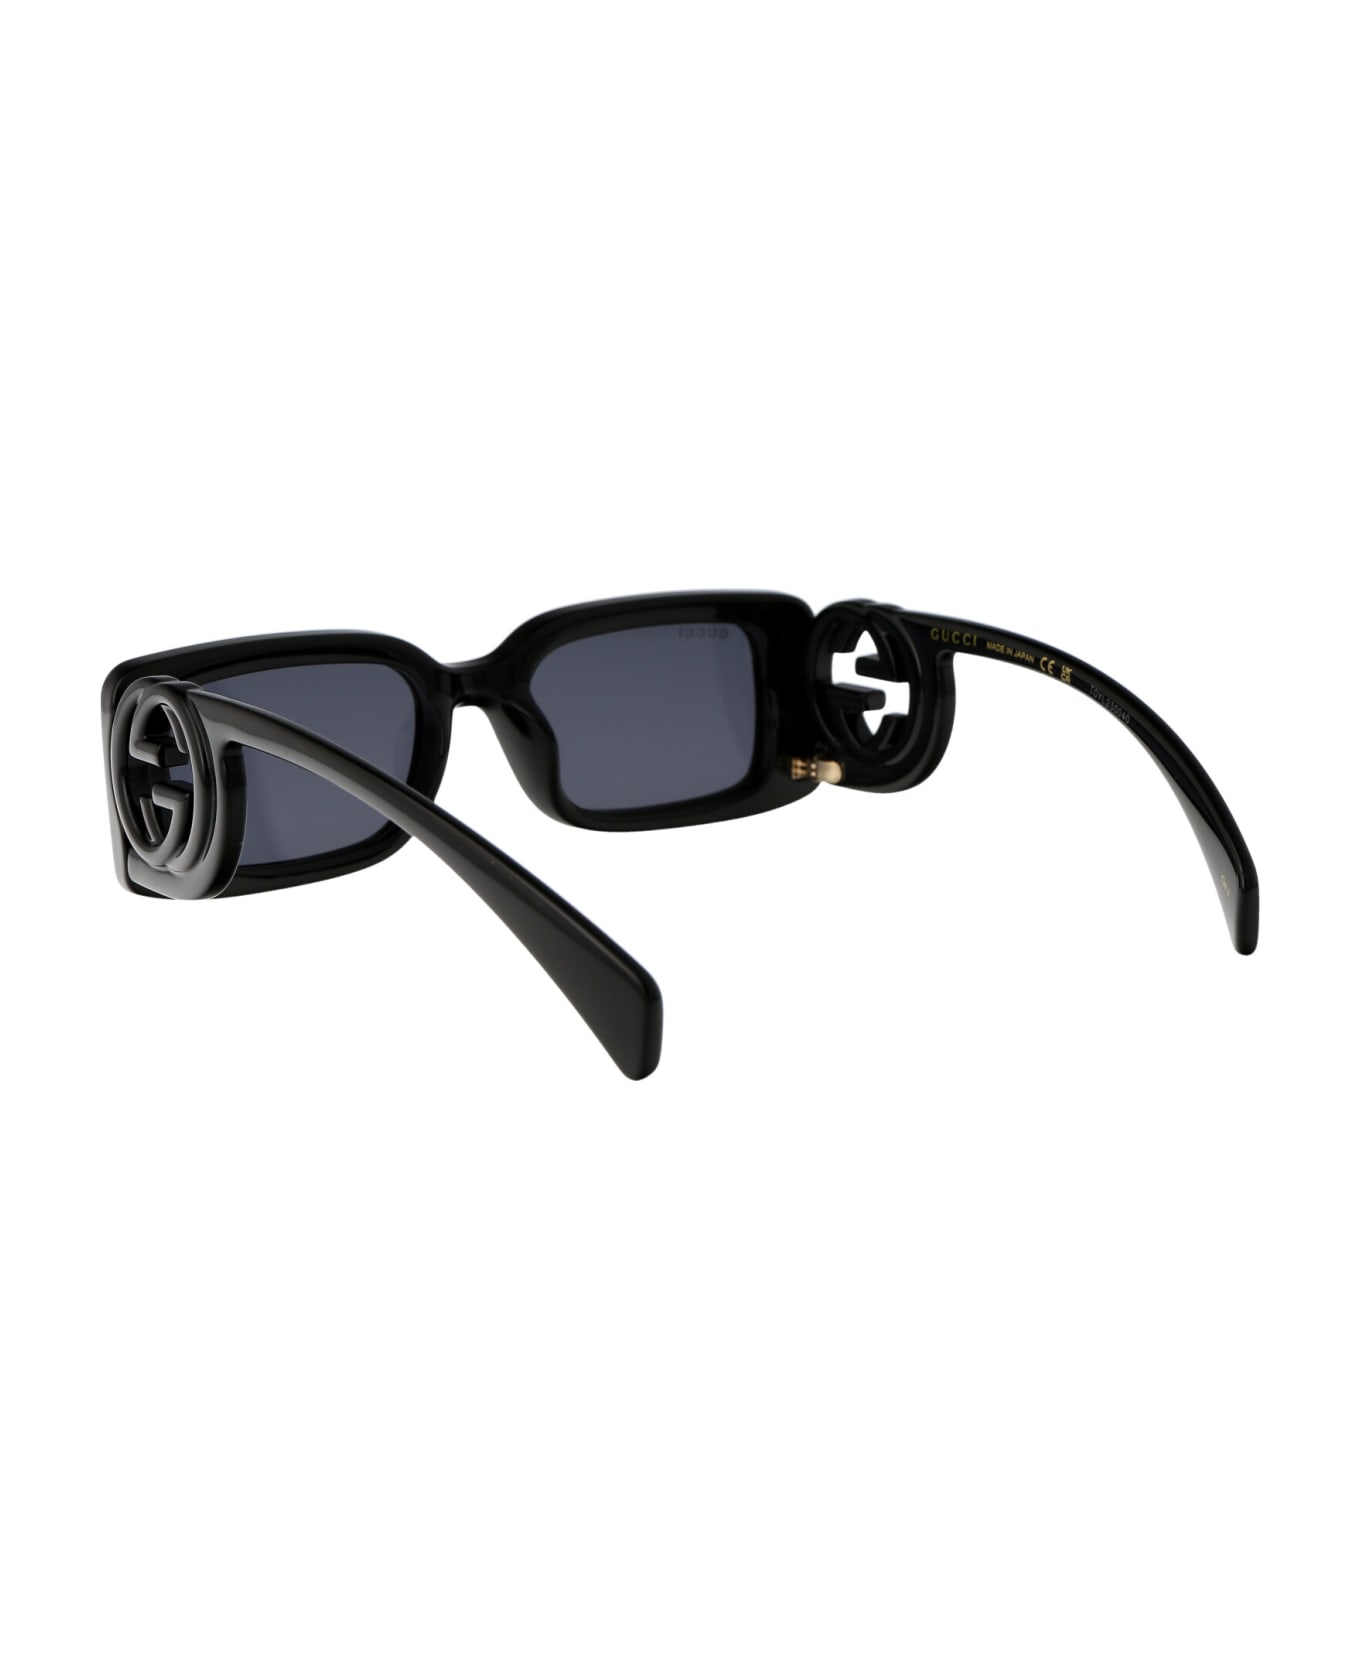 Gucci Eyewear Gg1325s Sunglasses - 001 BLACK BLACK GREY